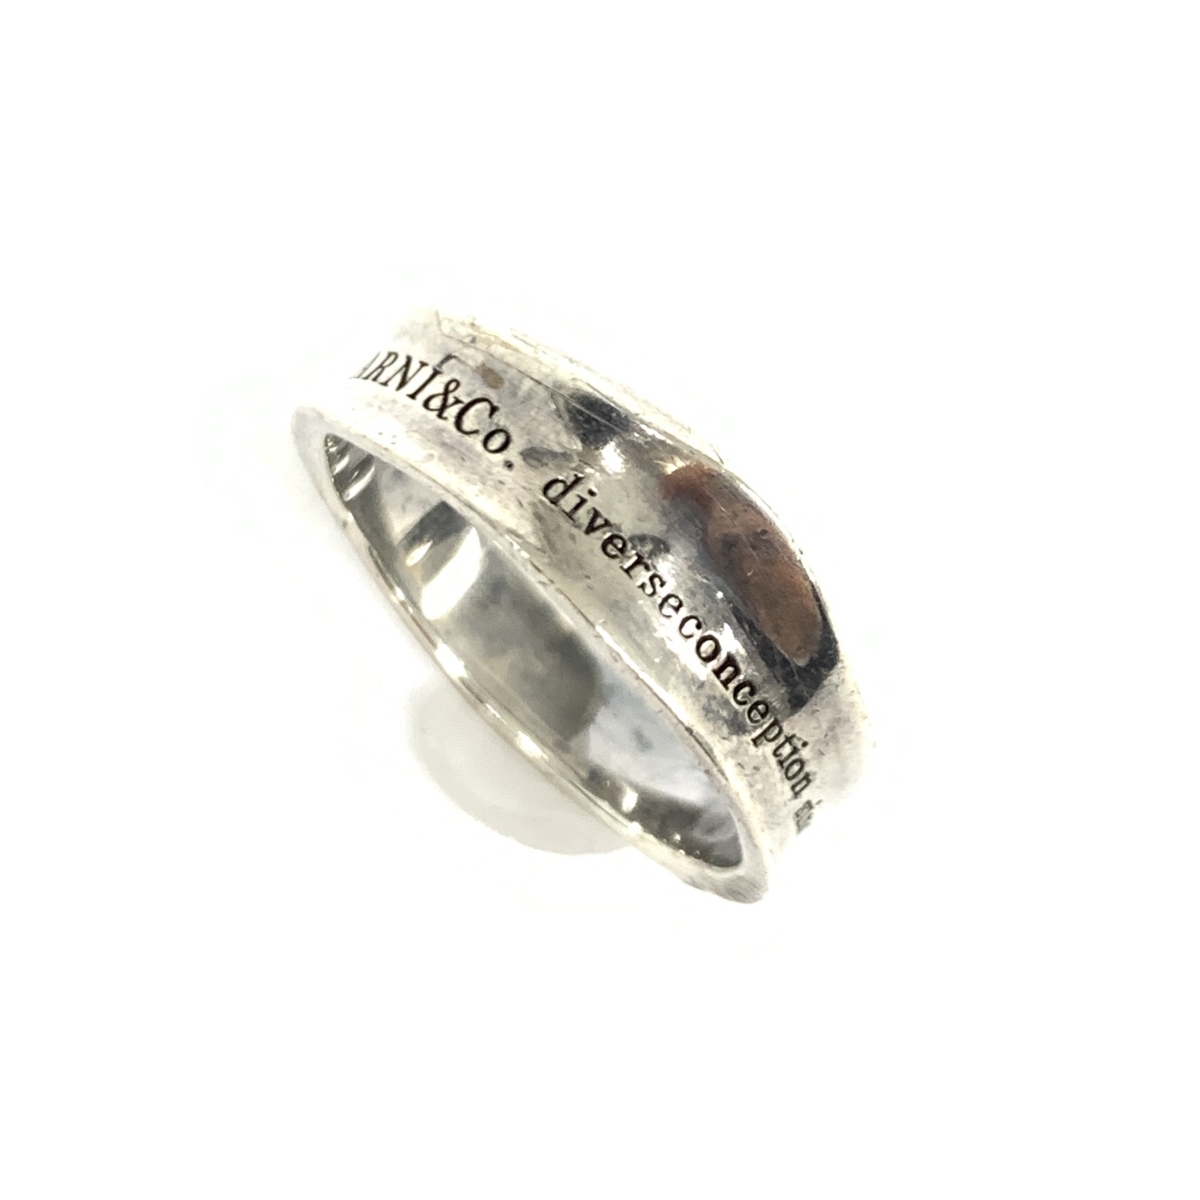 ◆GARNI ガルニ リング ◆ シルバーカラー シルバー ユニセックス 指輪 ring accessory アクセサリーの画像1